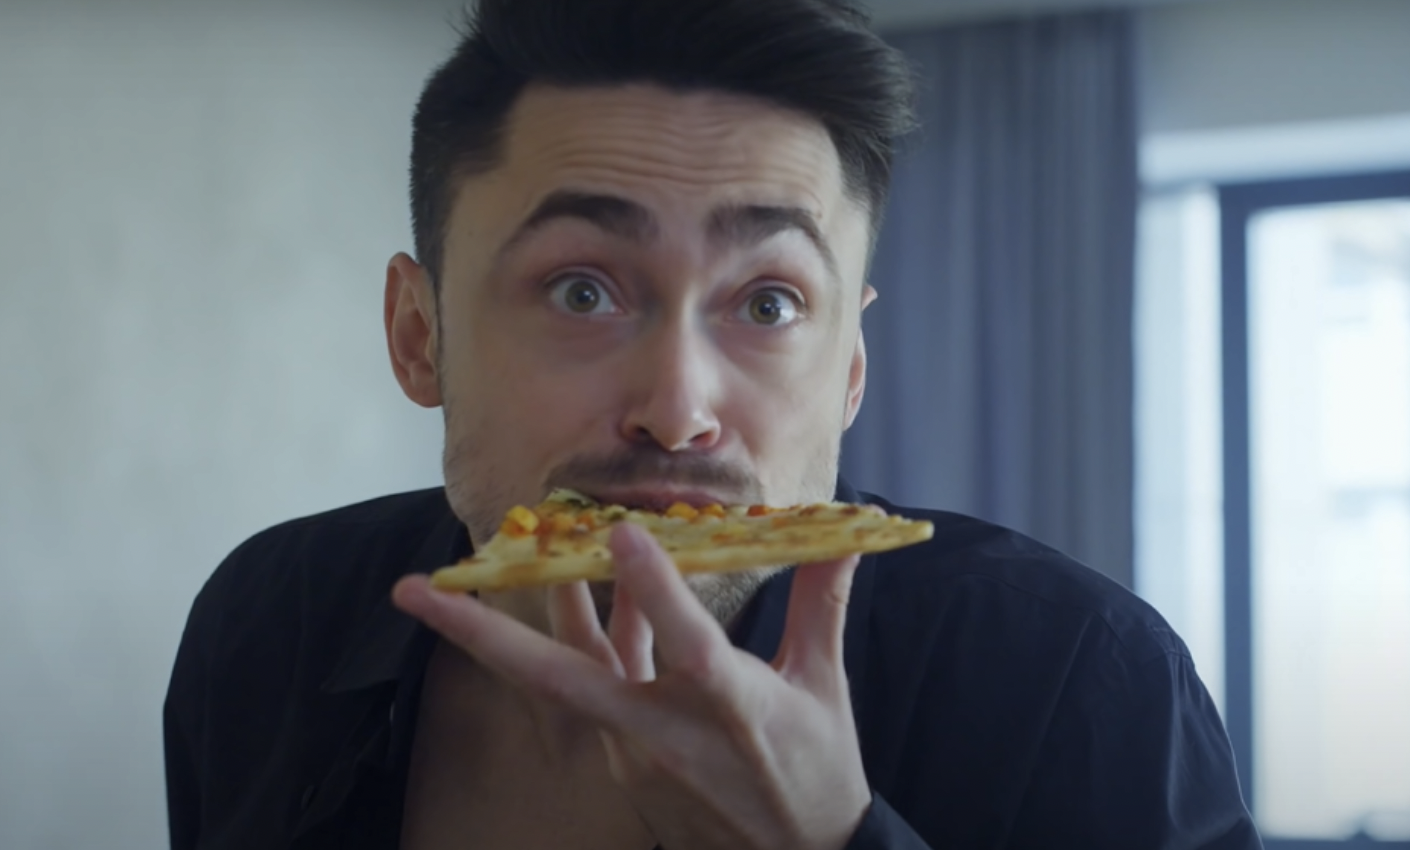 Mann isst Pizza | Quelle: YouTube / DramatizeMe